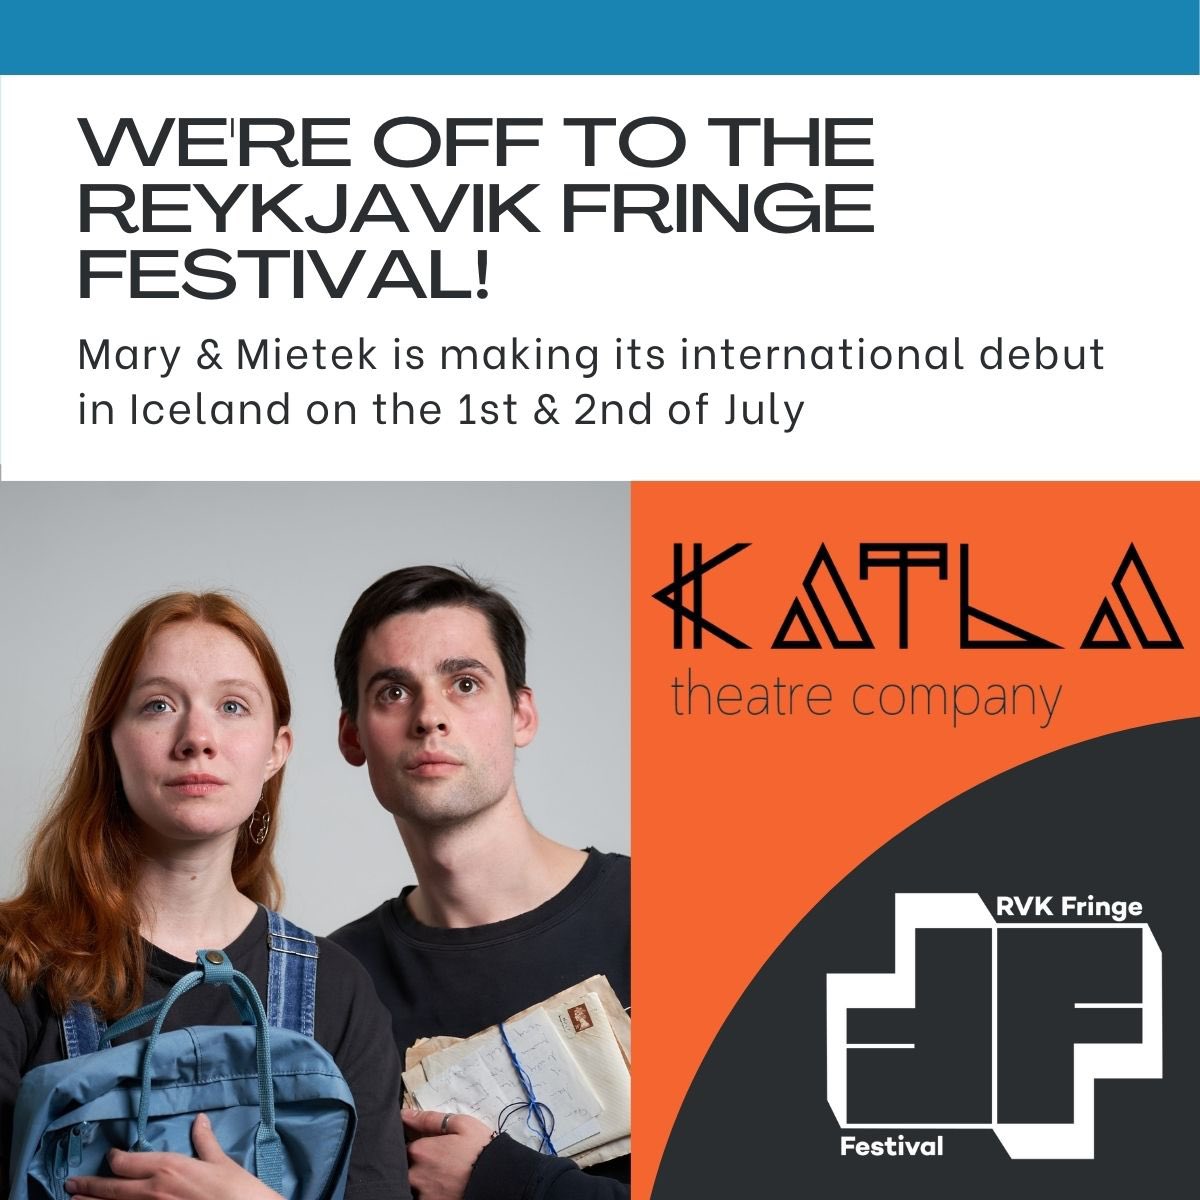 Teatro Katla con “Mary and Mietek” en Reykjavik